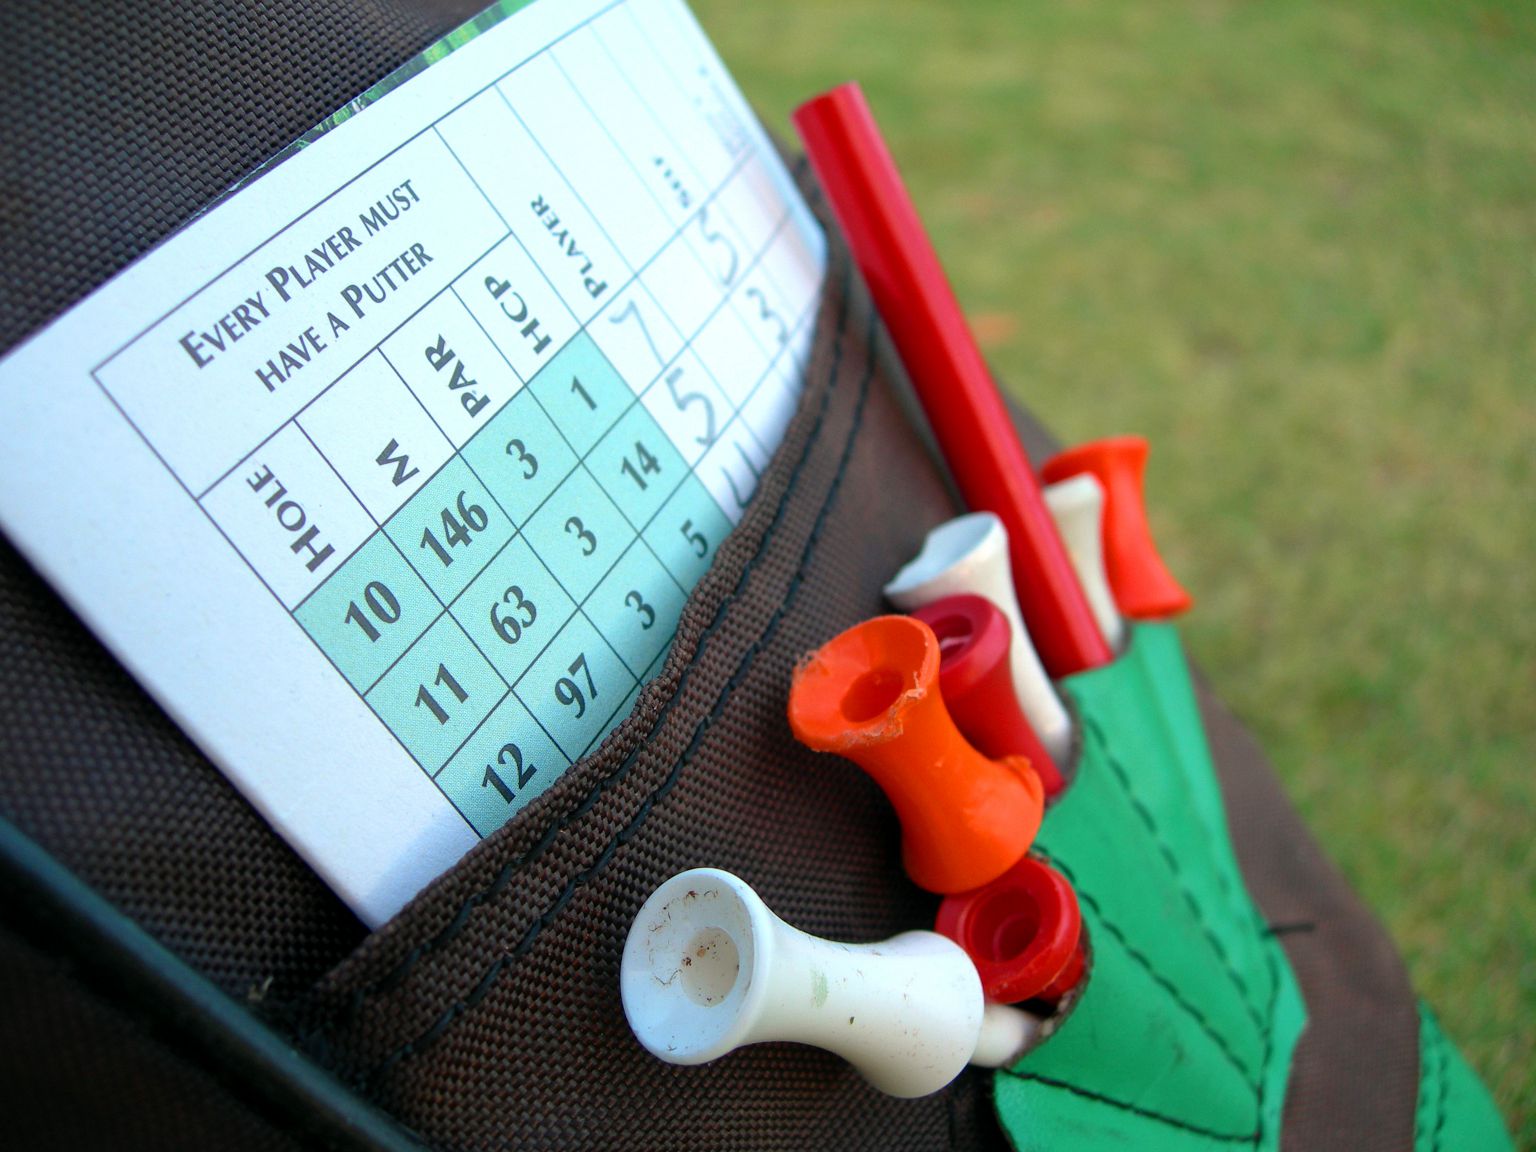 Break Par Golf Game, Board Game